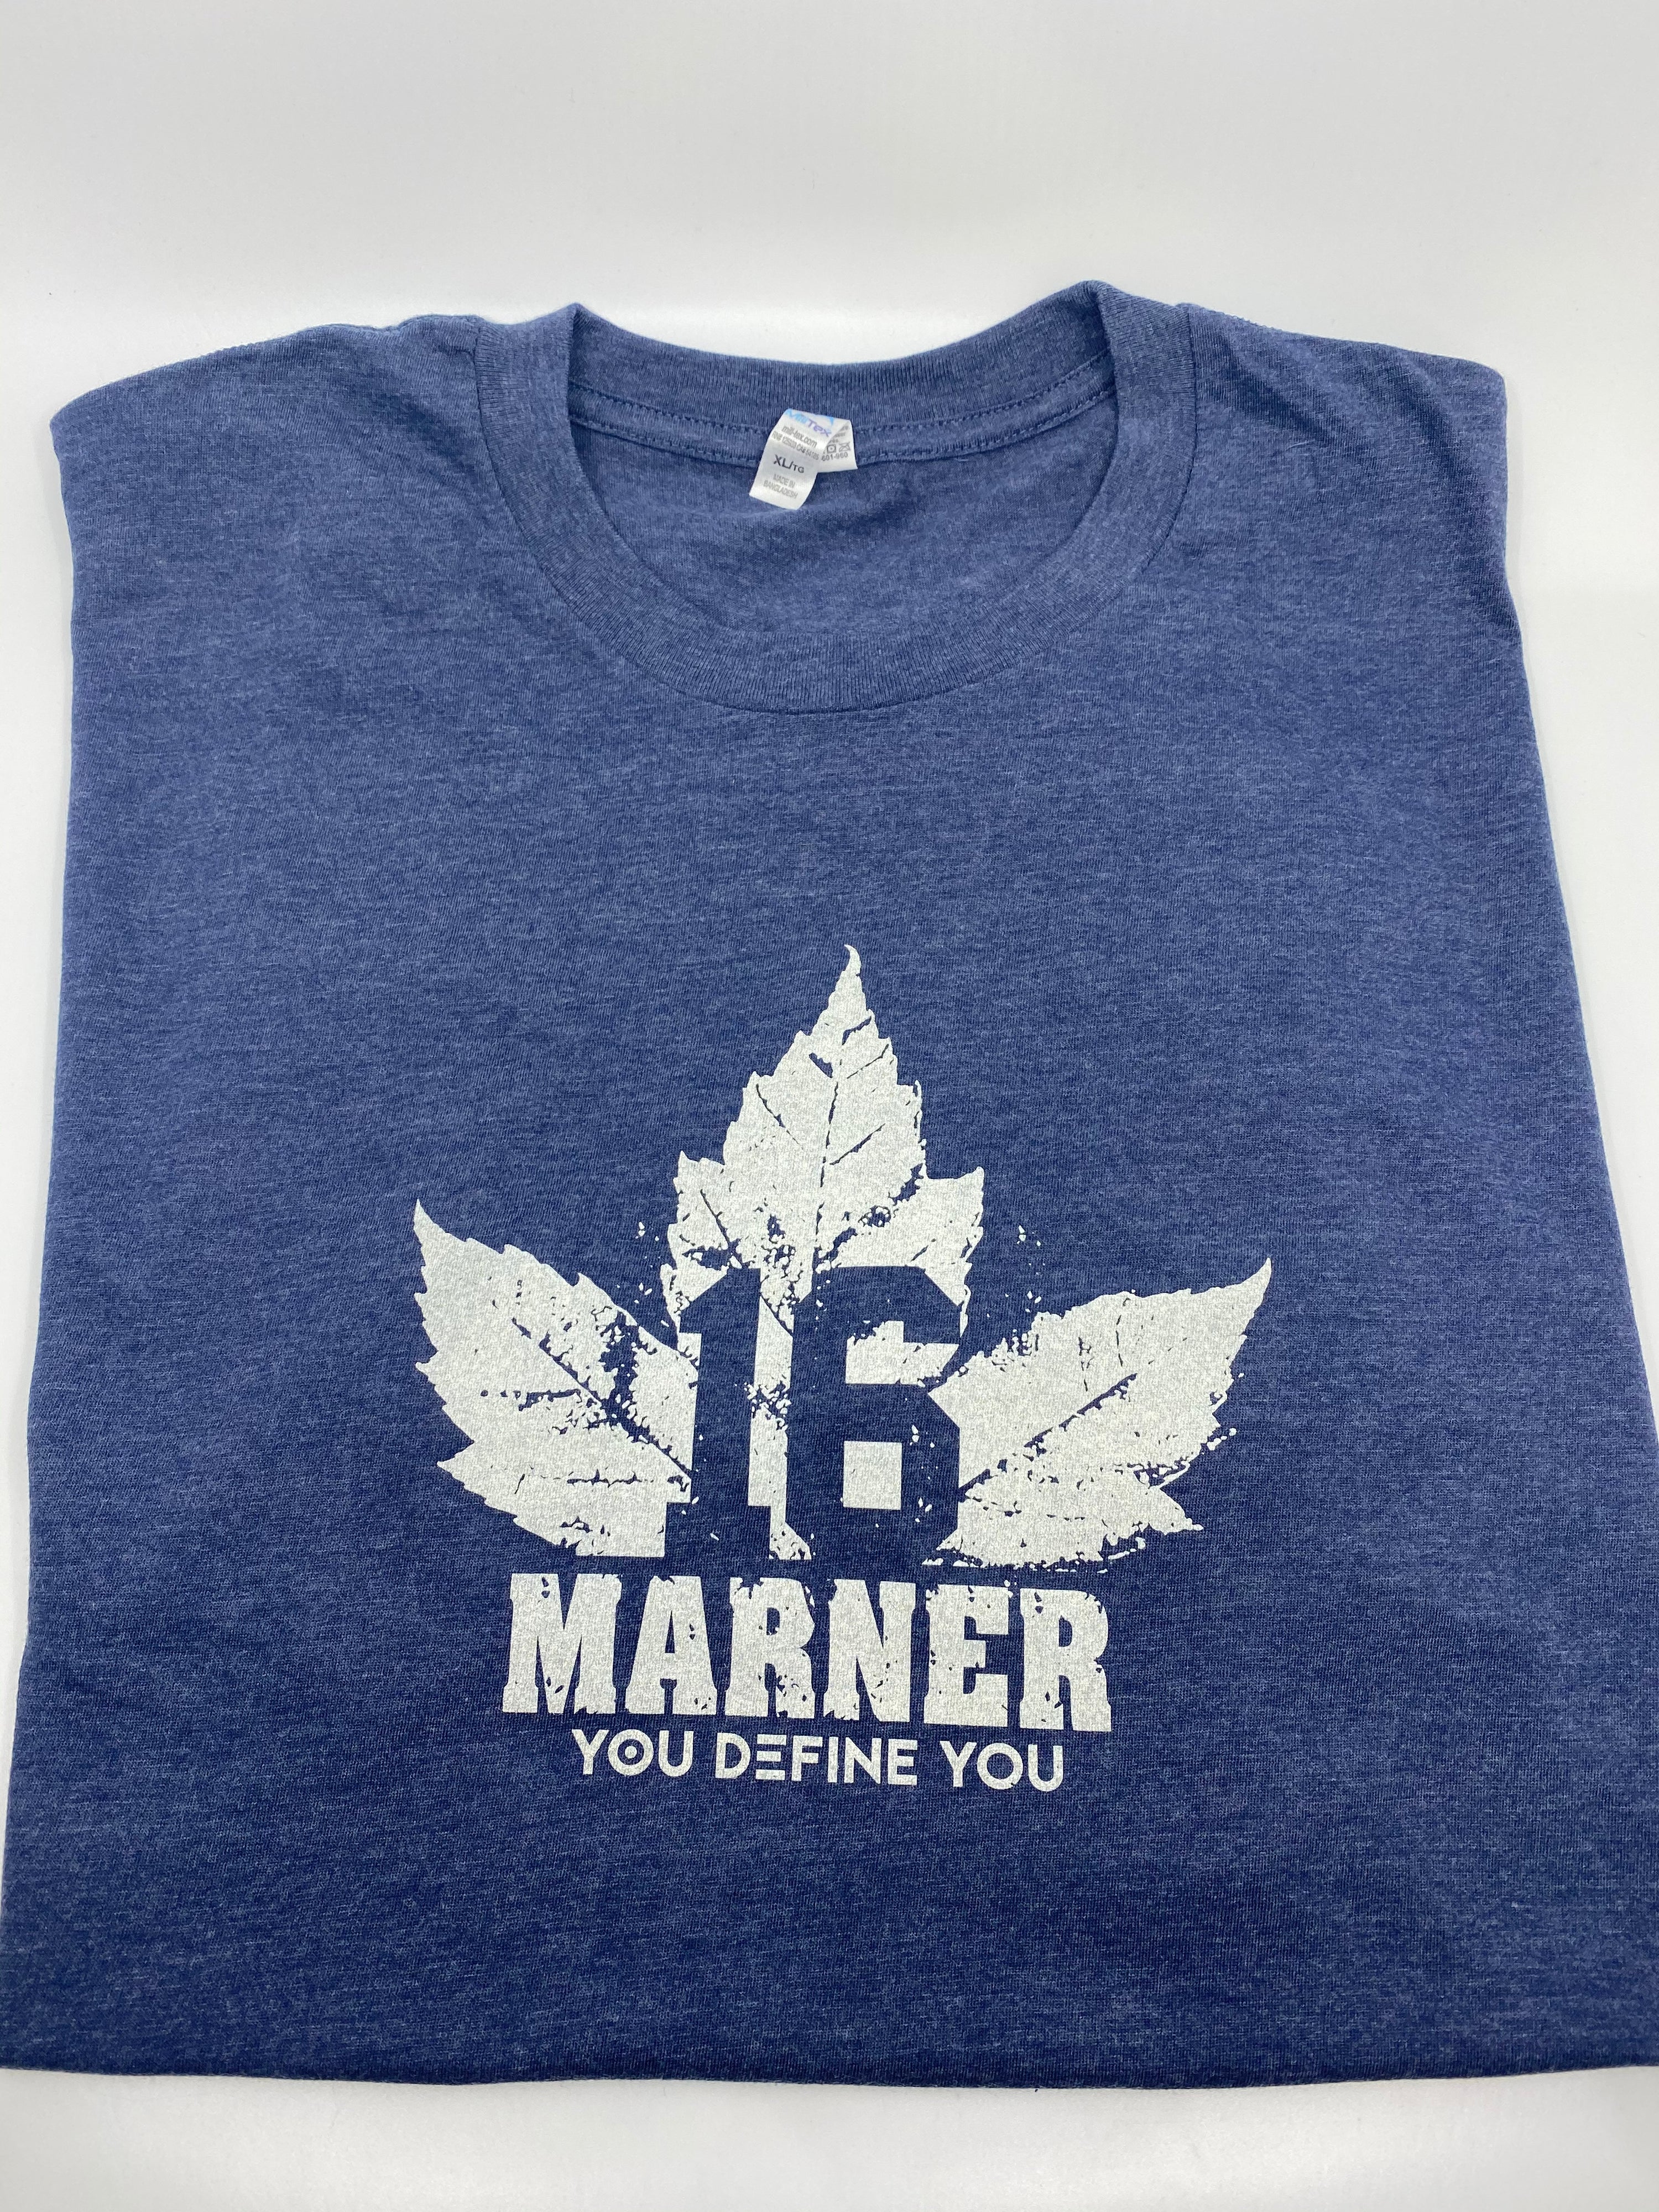 Marner "You Define You" Blue T Shirt